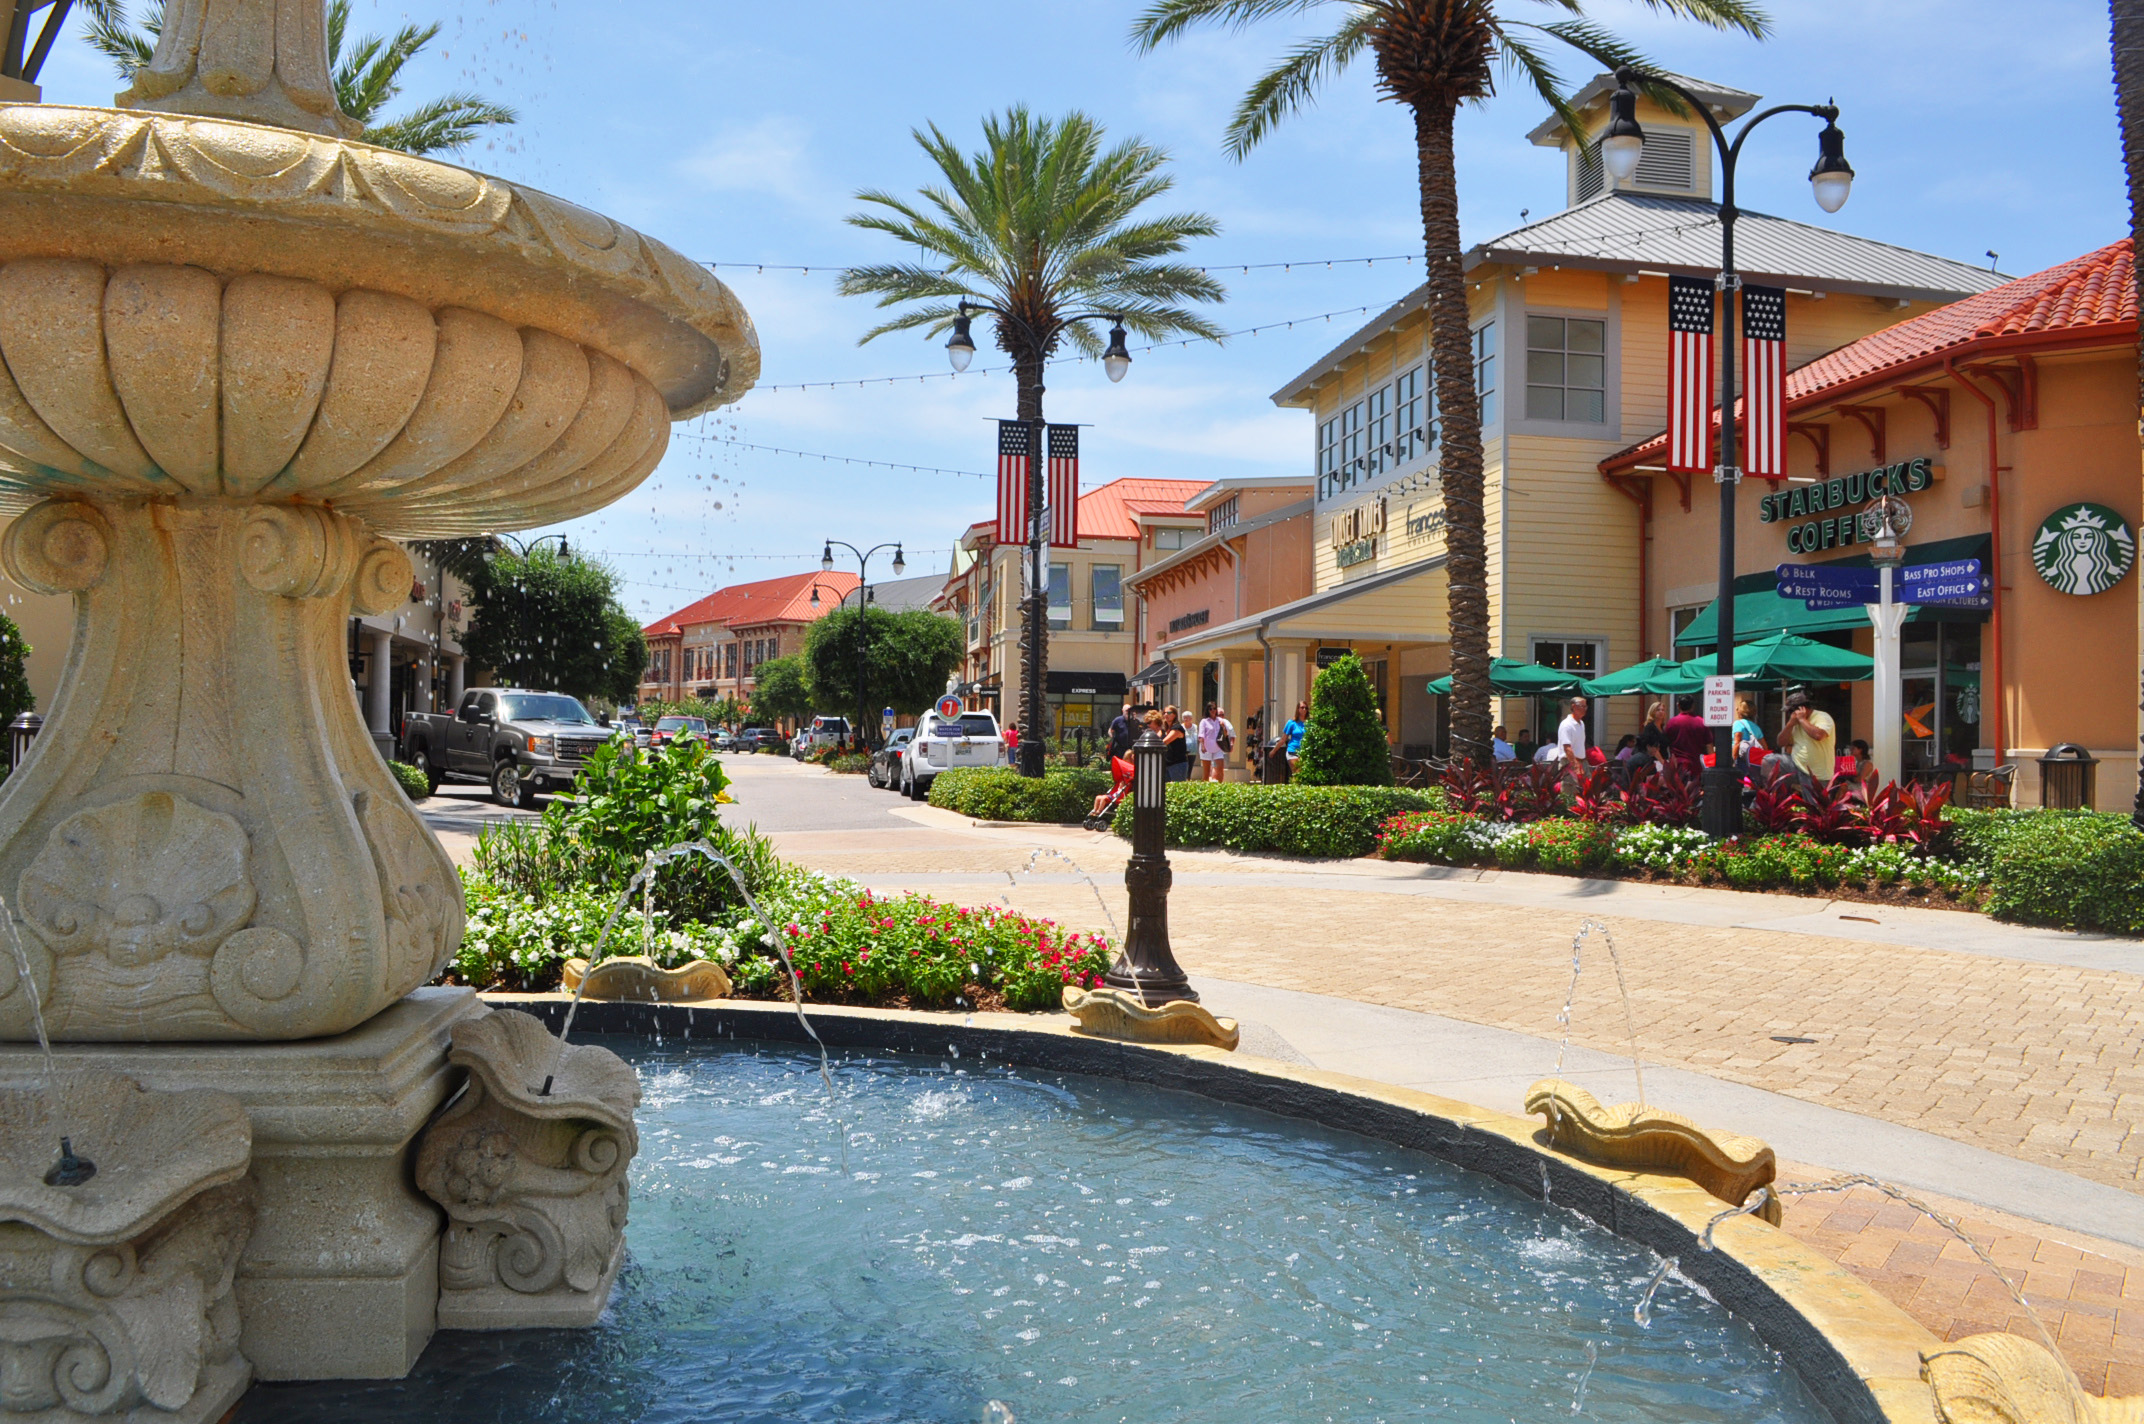 Destin Florida Fort Walton Beach Okaloosa Island Shopping and Vacation Rentals by Sunset Resort Rentals